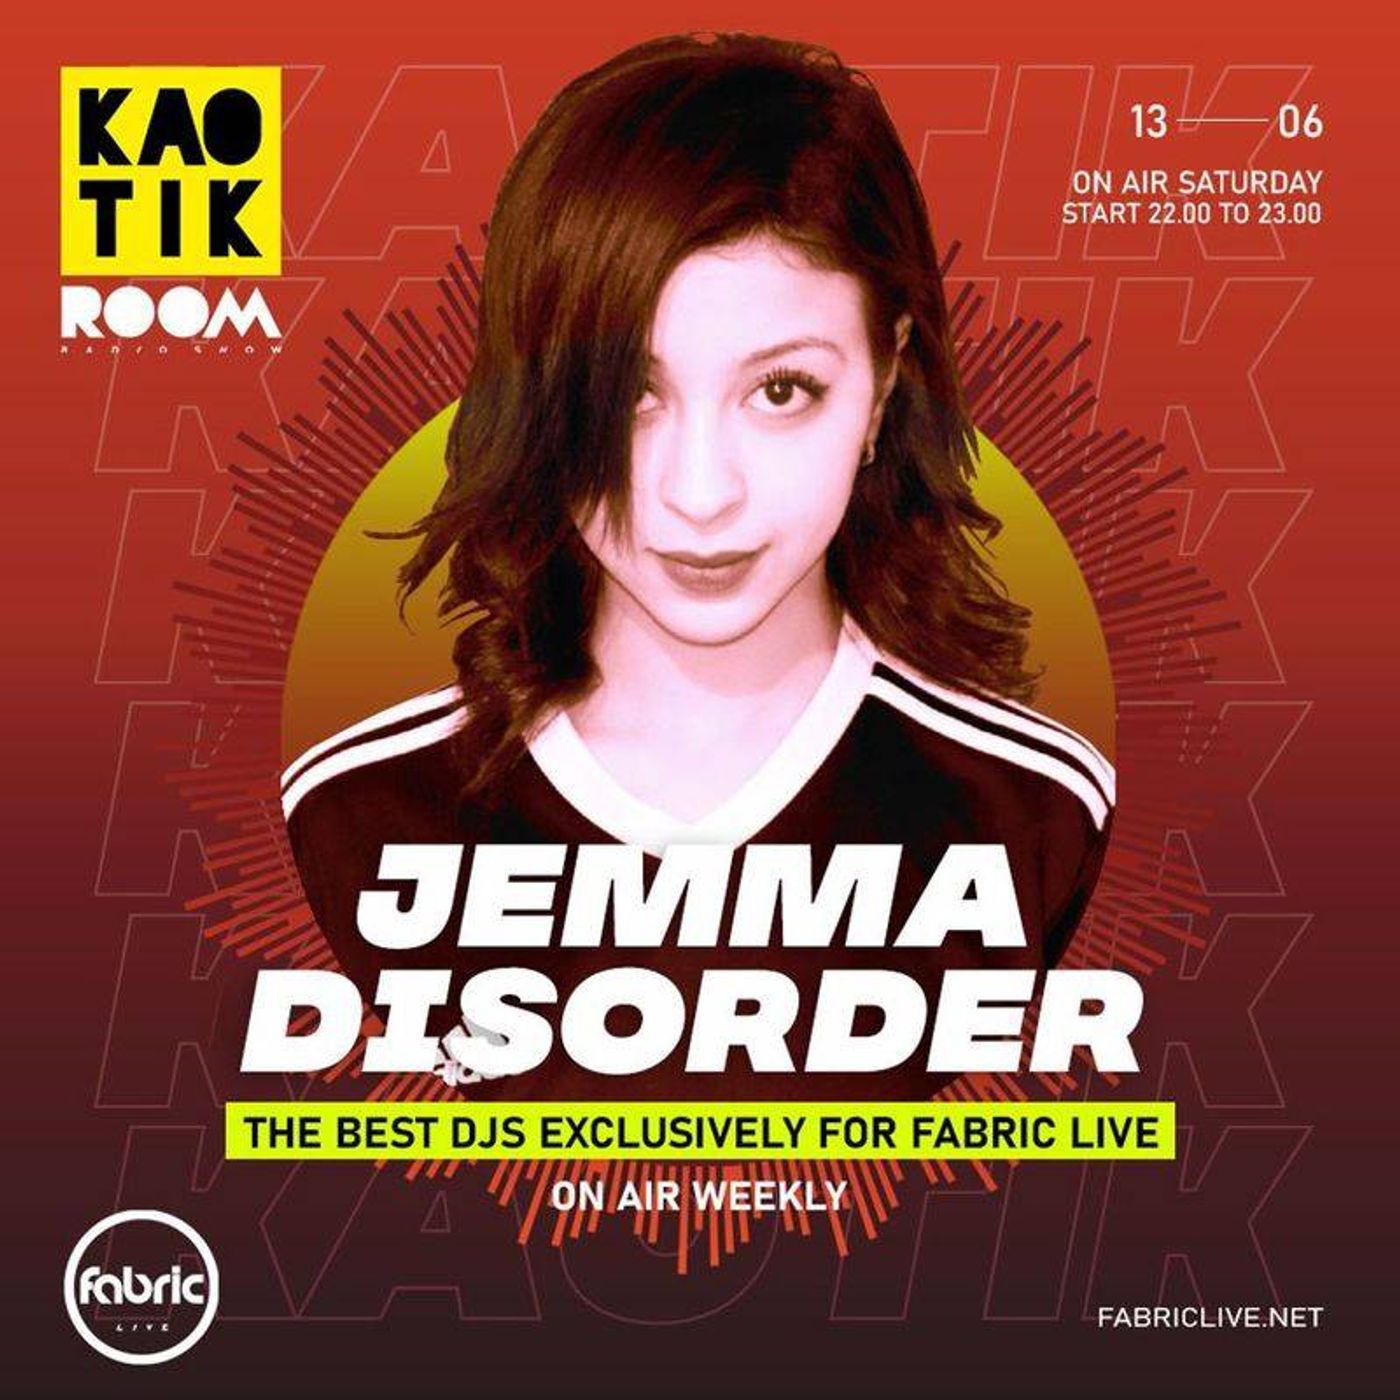 JEMMA DISORDER - KAOTIK ROOM EP. 008